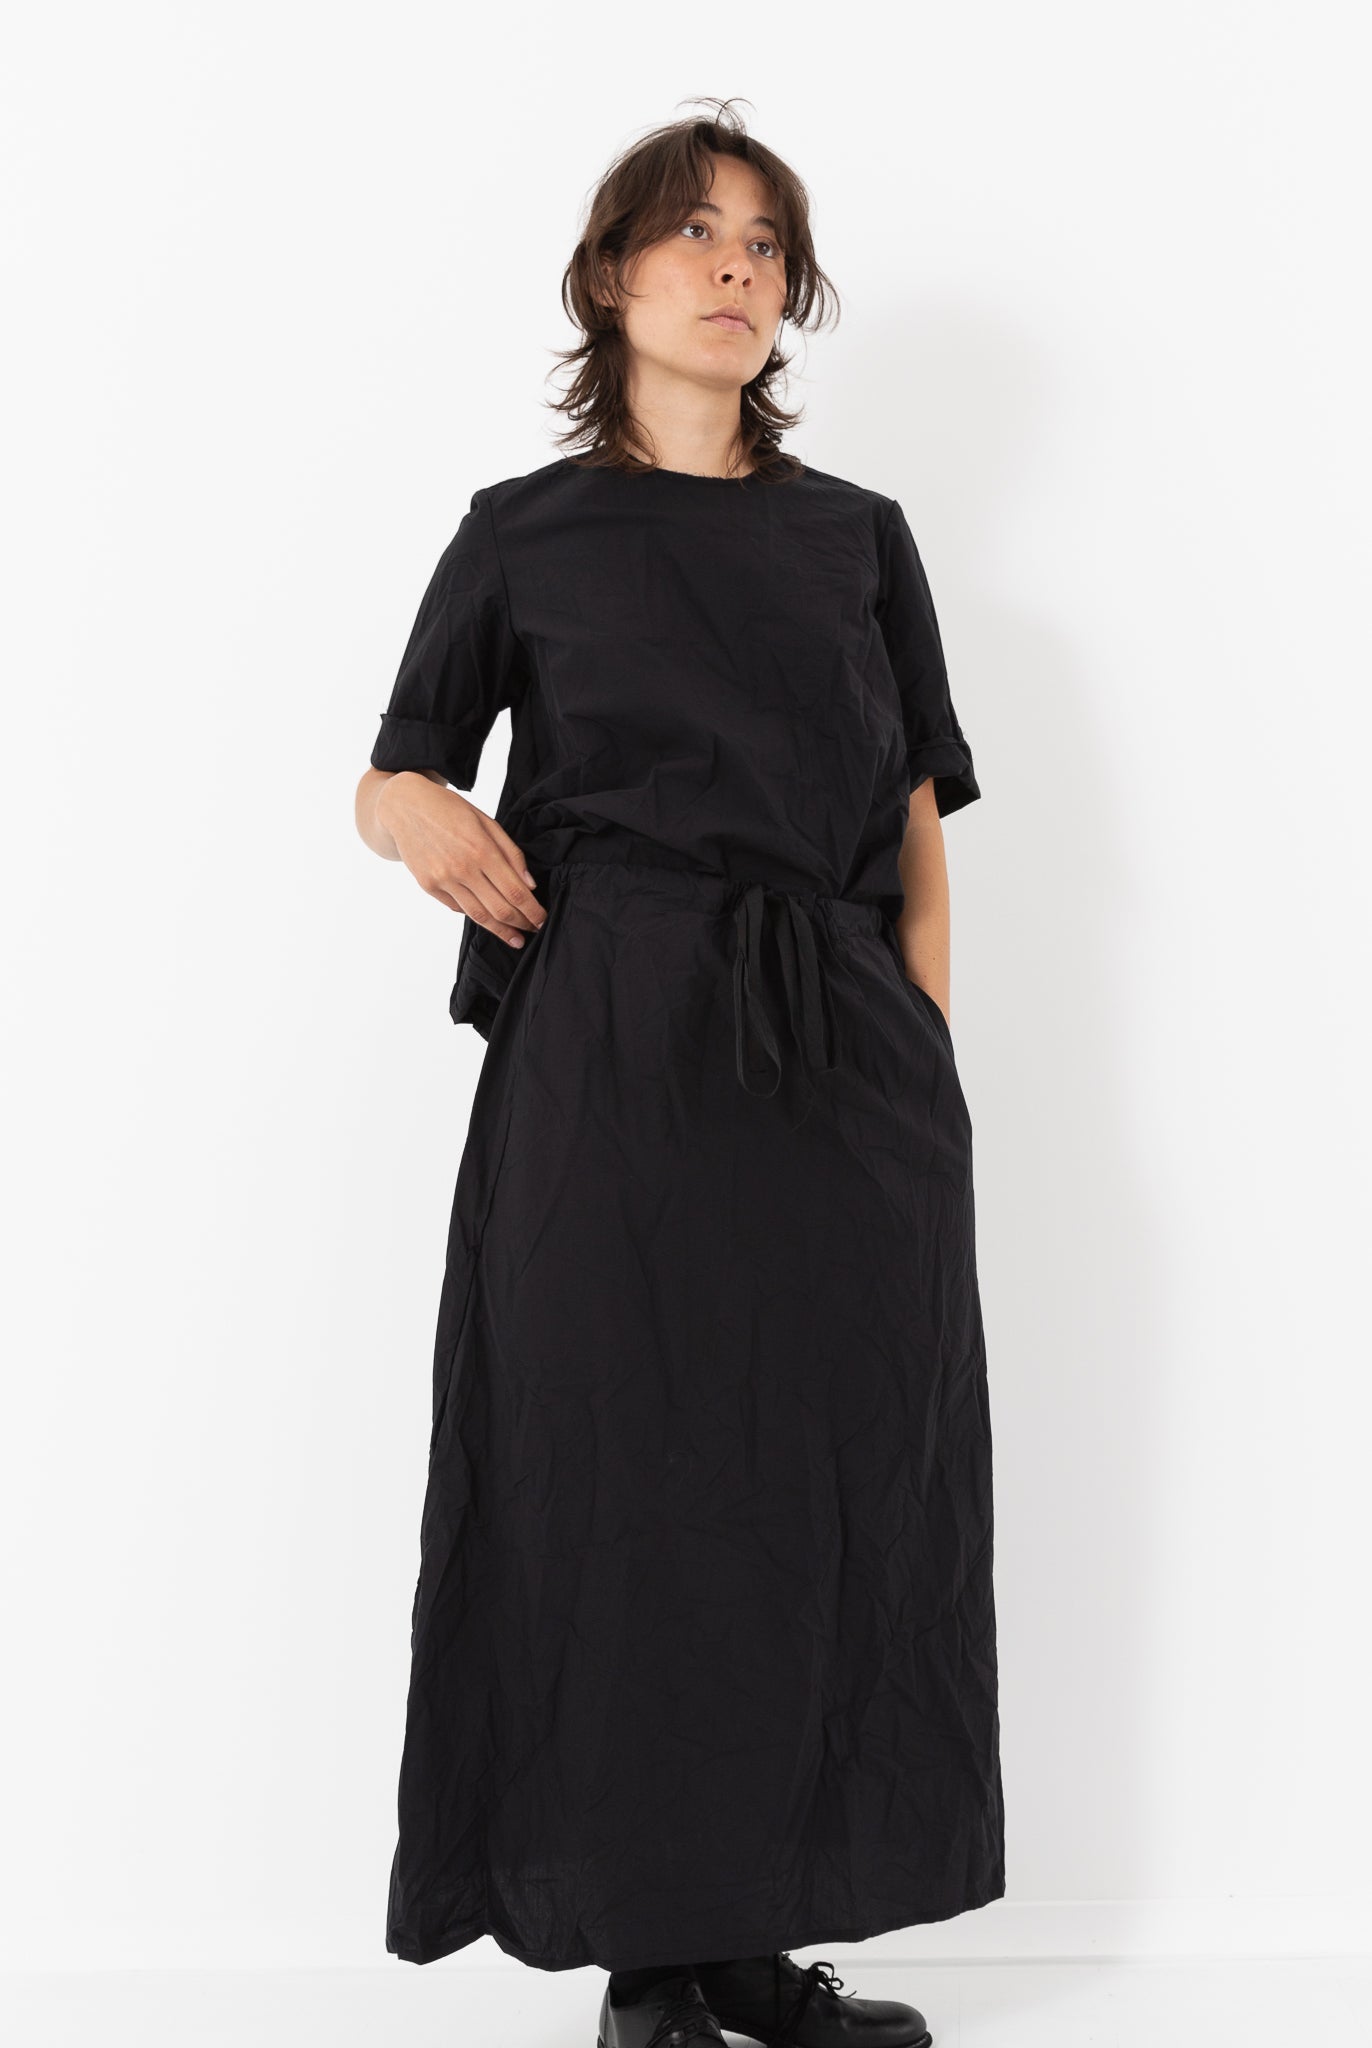 SCHA Twisted Skirt, Black - Worthwhile, Inc.